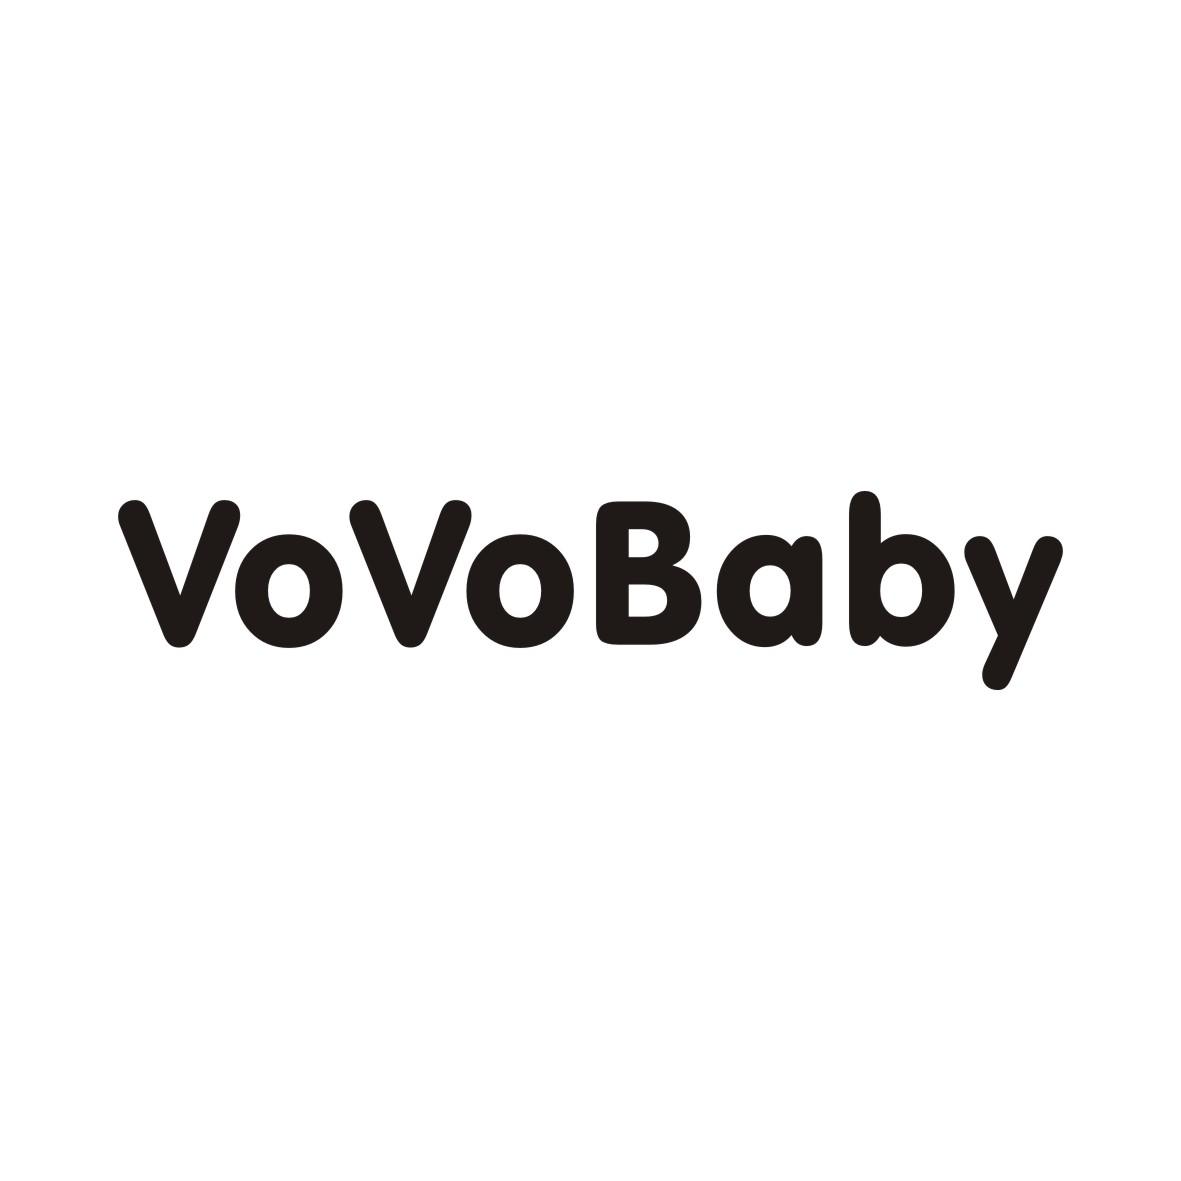 VOVOBABY熨斗商标转让费用买卖交易流程